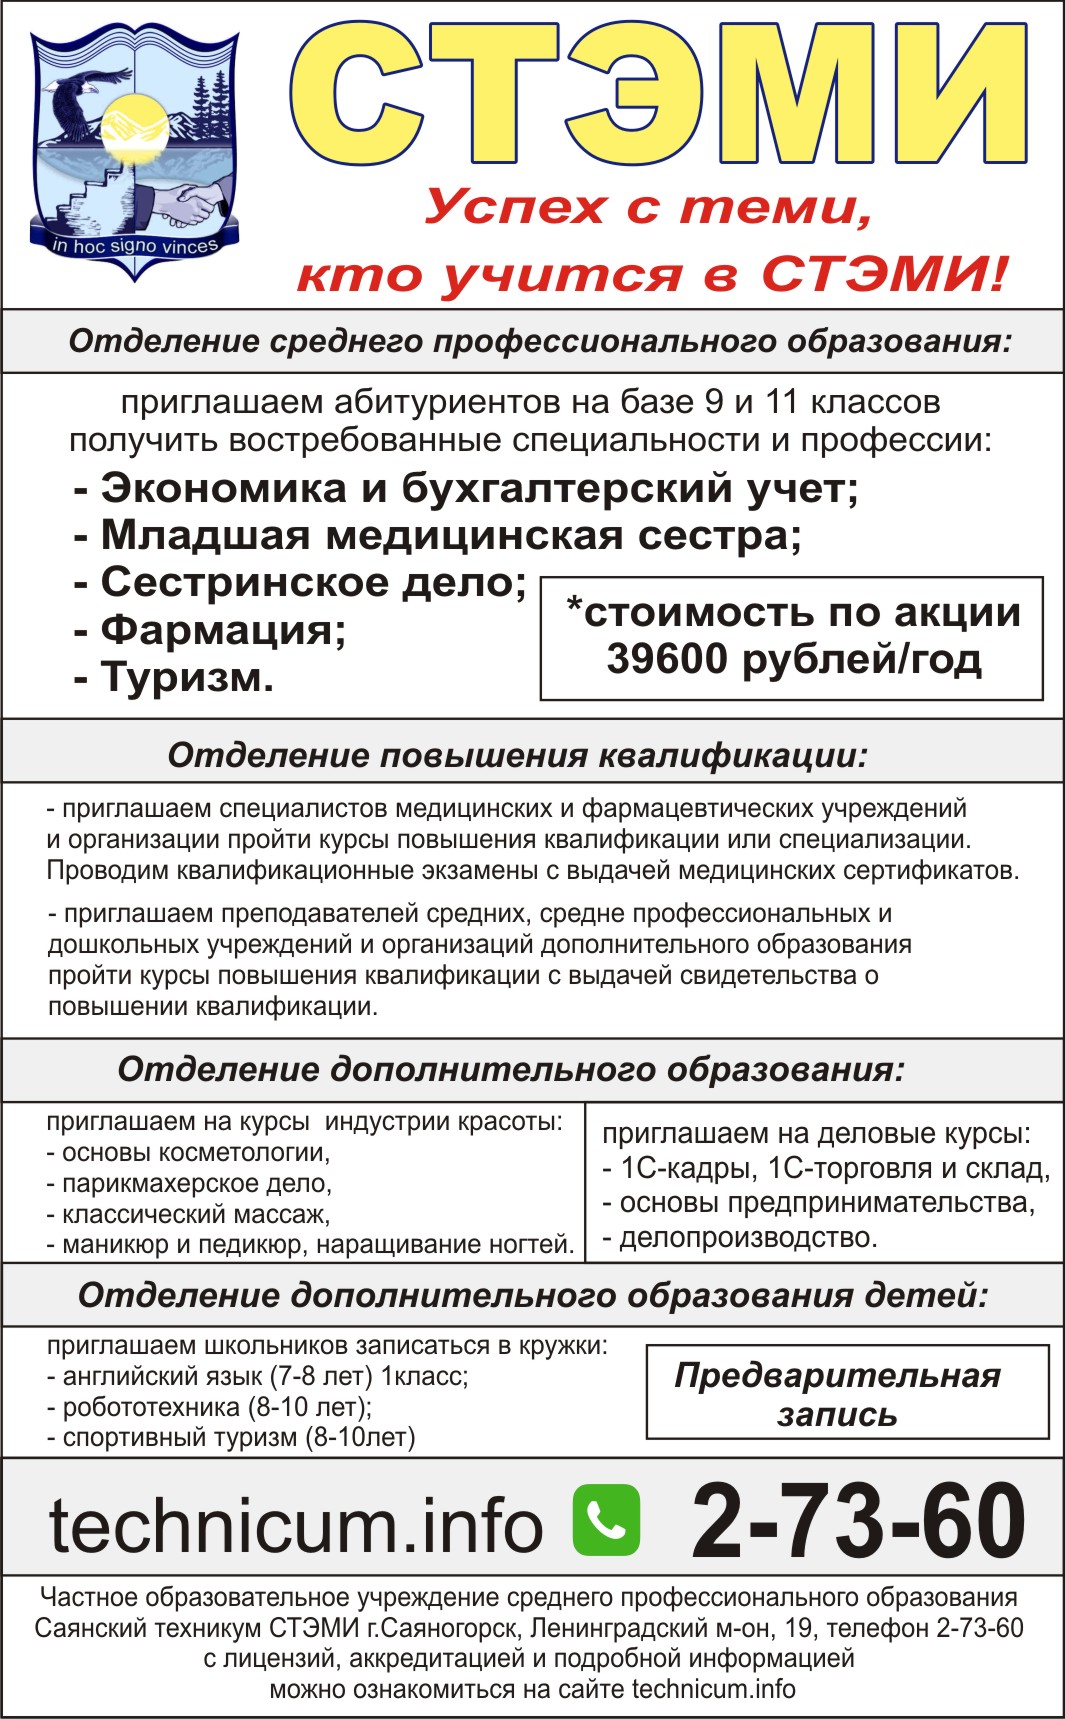 Саяногорск Инфо - reklama-gazety-2016.jpg, Скачано: 298